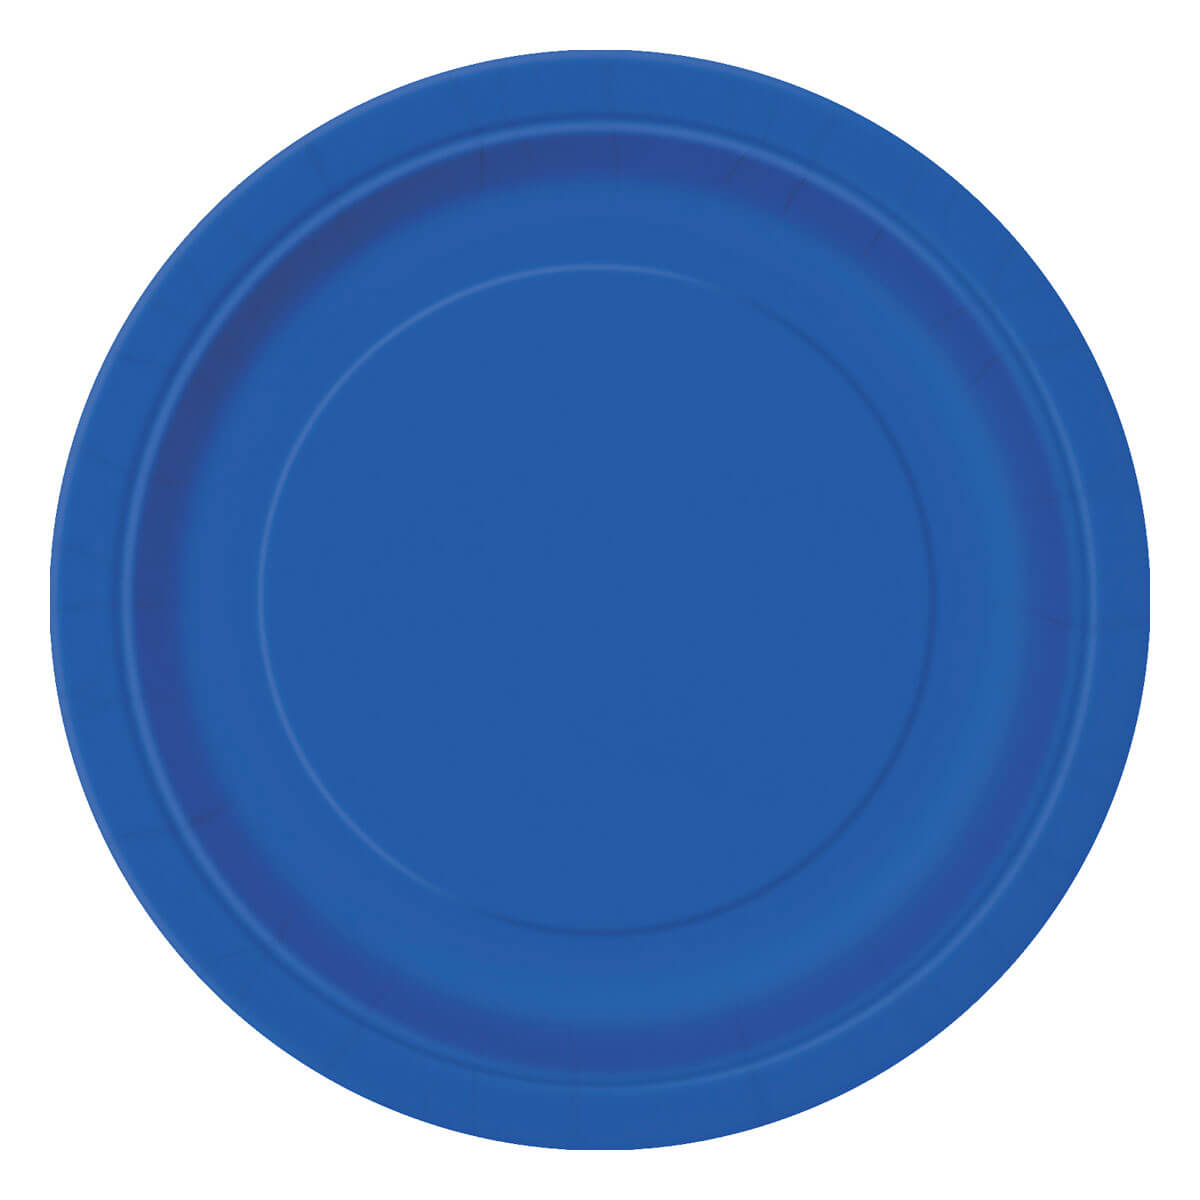 Pappteller blau ⌀ 23cm, 8 Stück